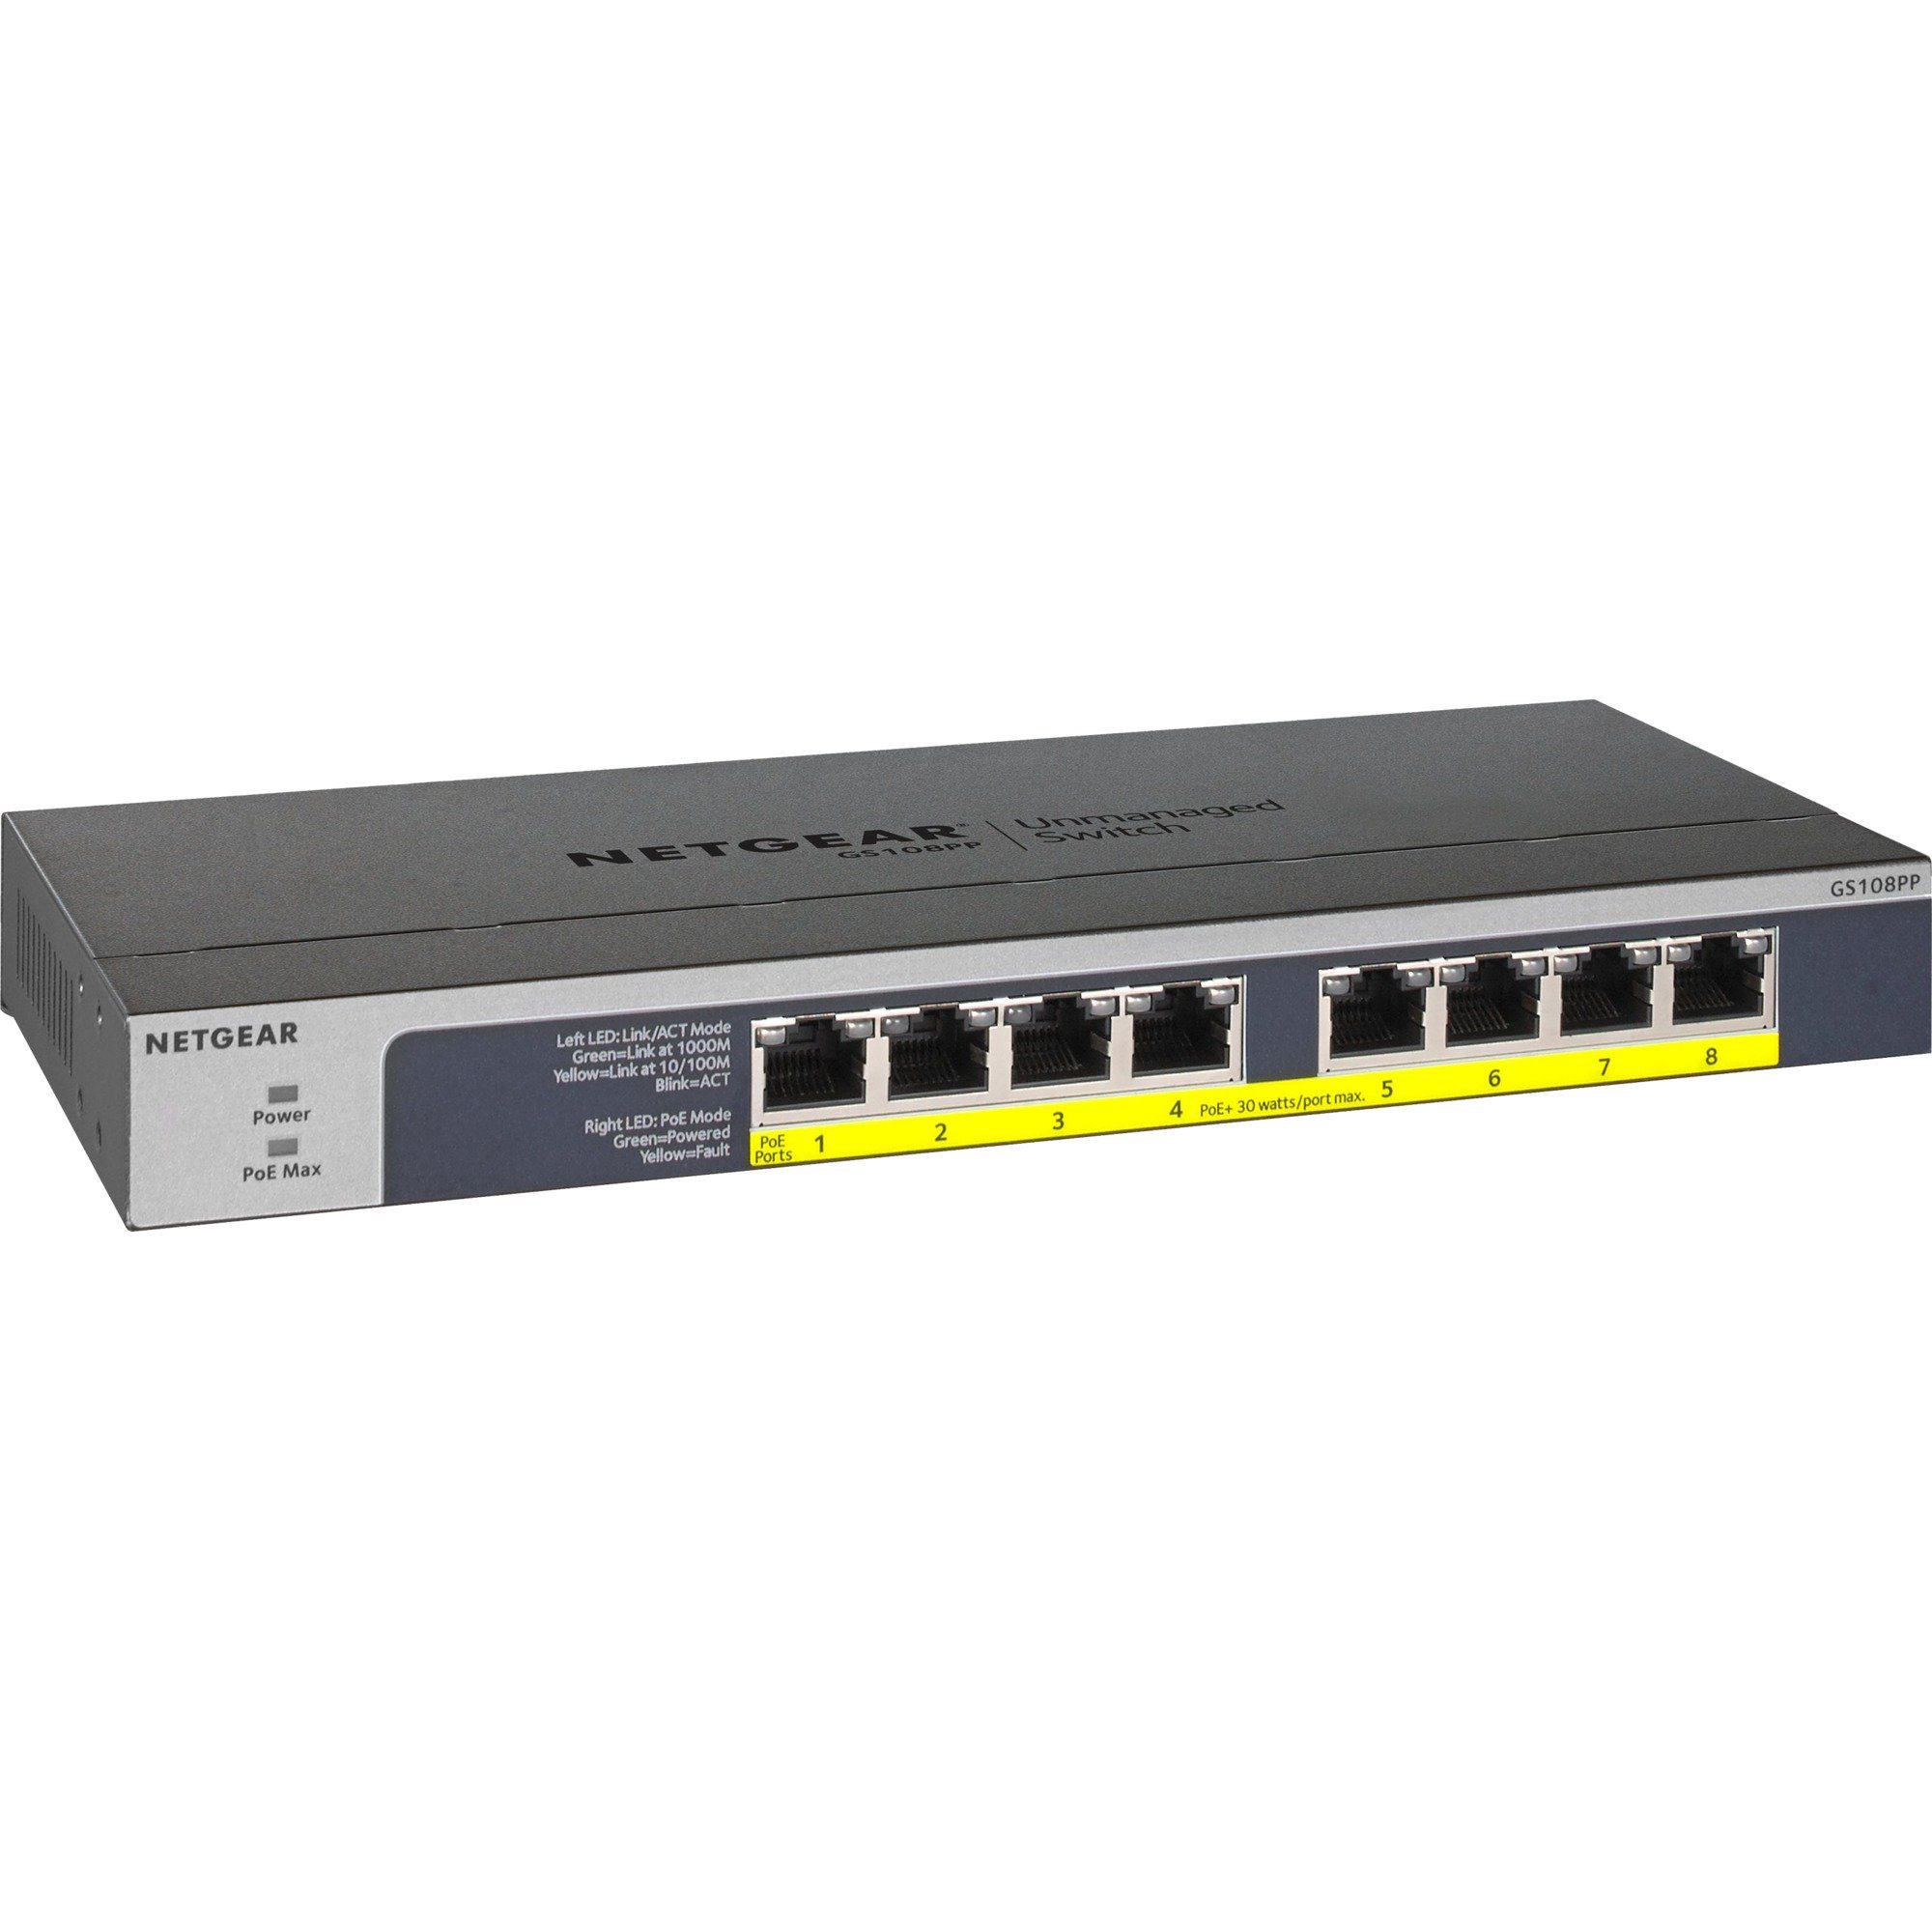 NETGEAR Netgear GS108PP, Switch Netzwerk-Switch